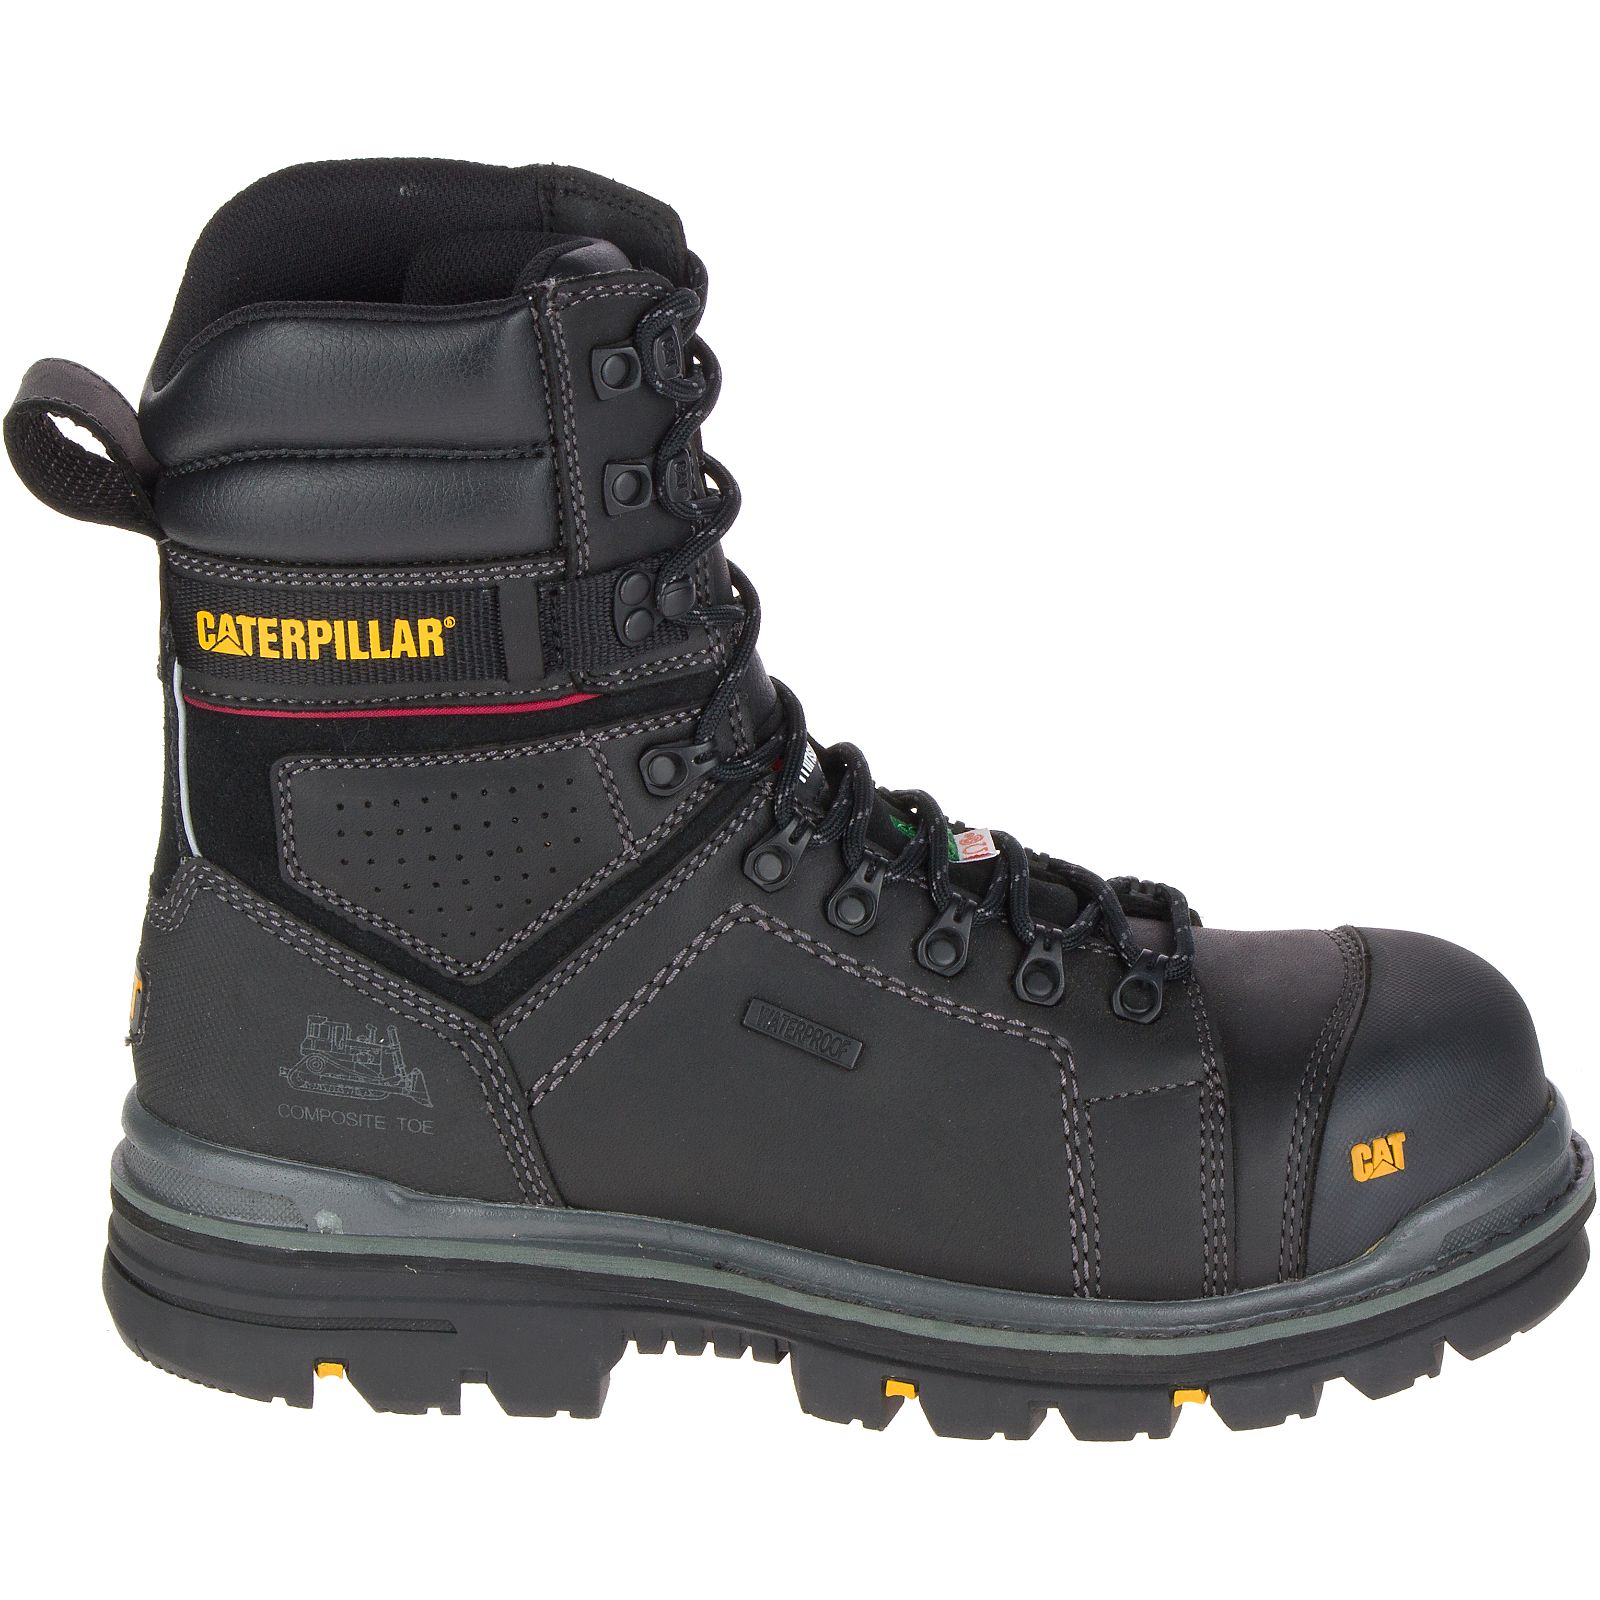 Black Caterpillar Hauler 8" Waterproof Composite Toe Csa Men's Work Boots | Cat-670832